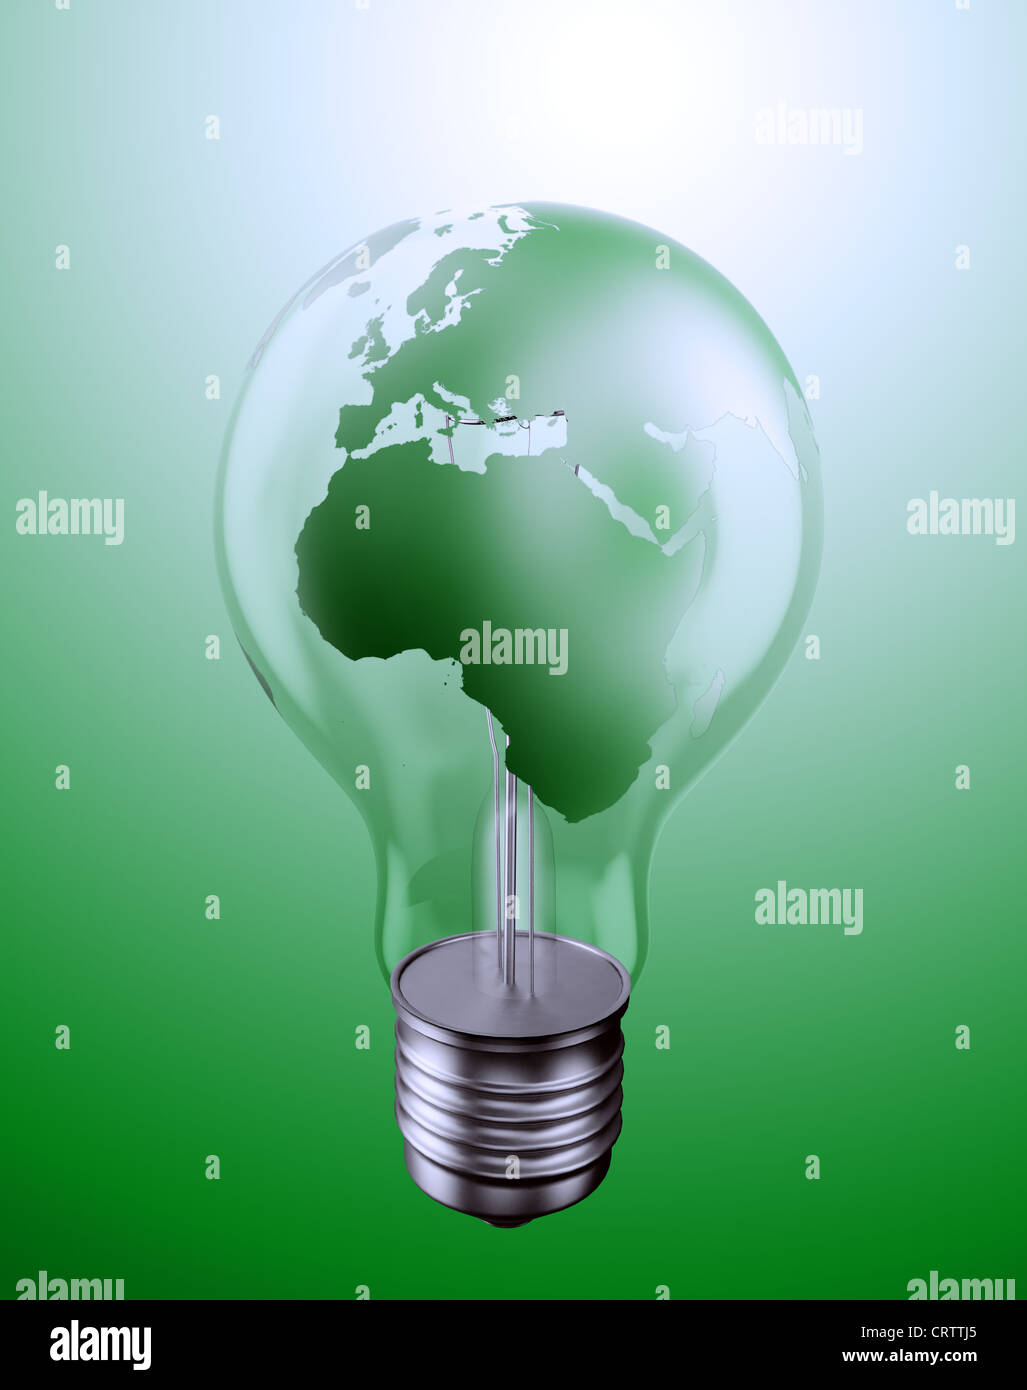 Welt Energie Themen Konzept Abbildung Stockfoto